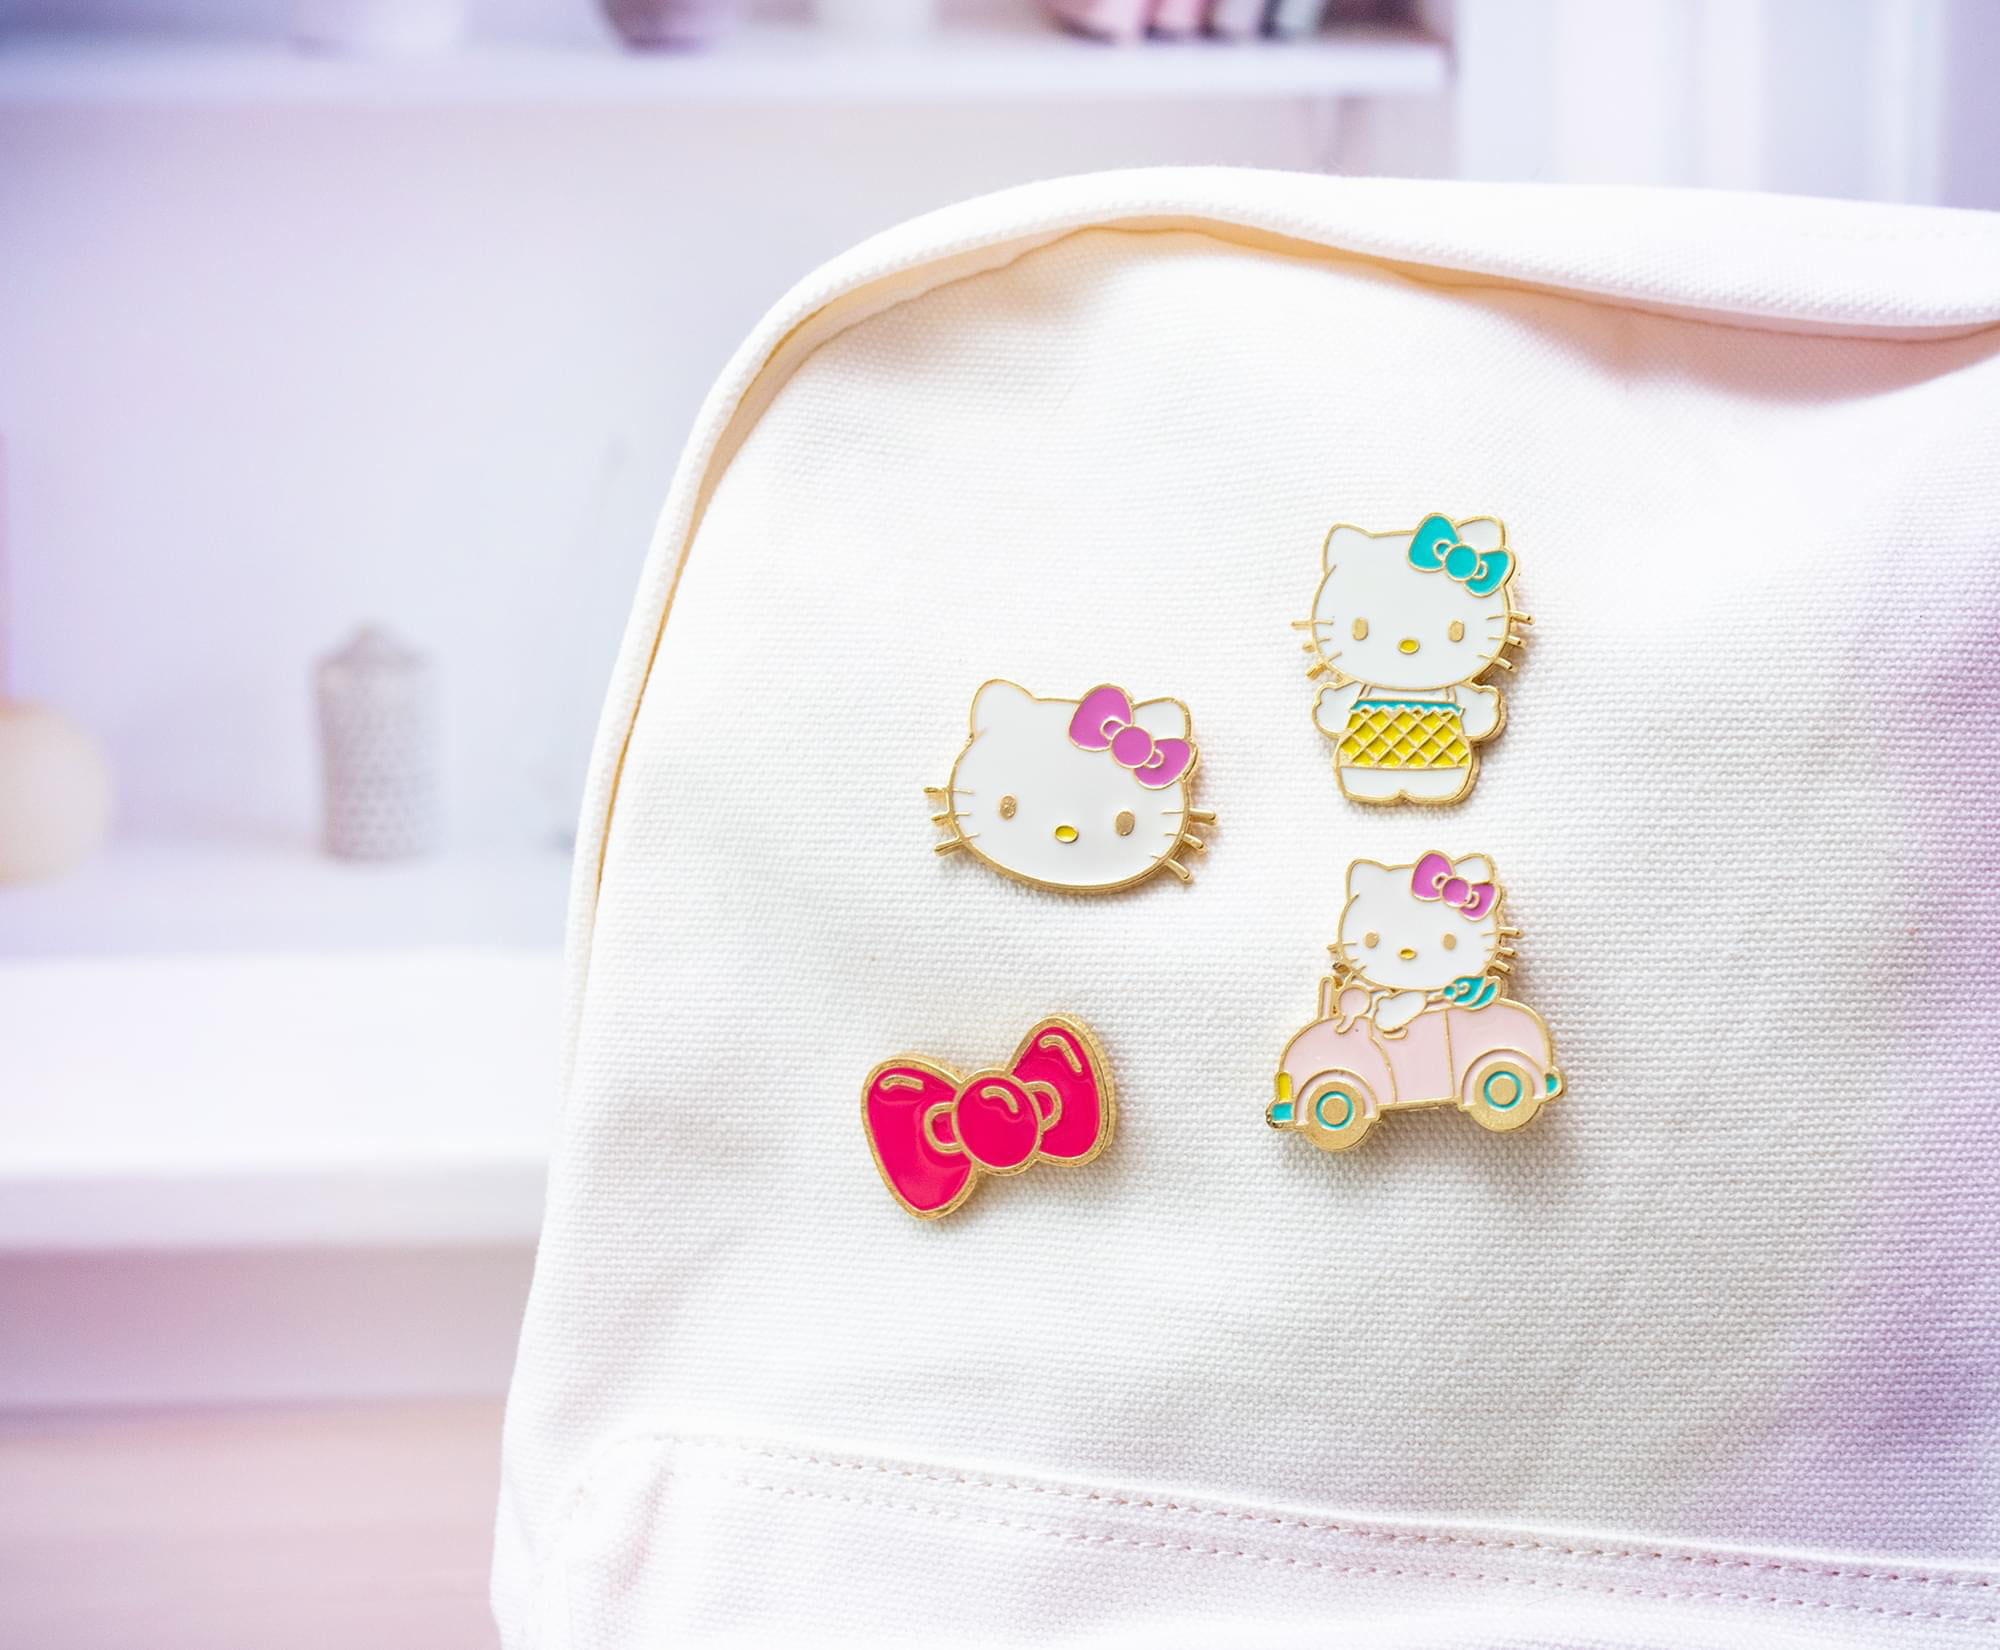 Hello Kitty Enamel Pin Sanrio for Lapel Backpacks Bags Pink Flower